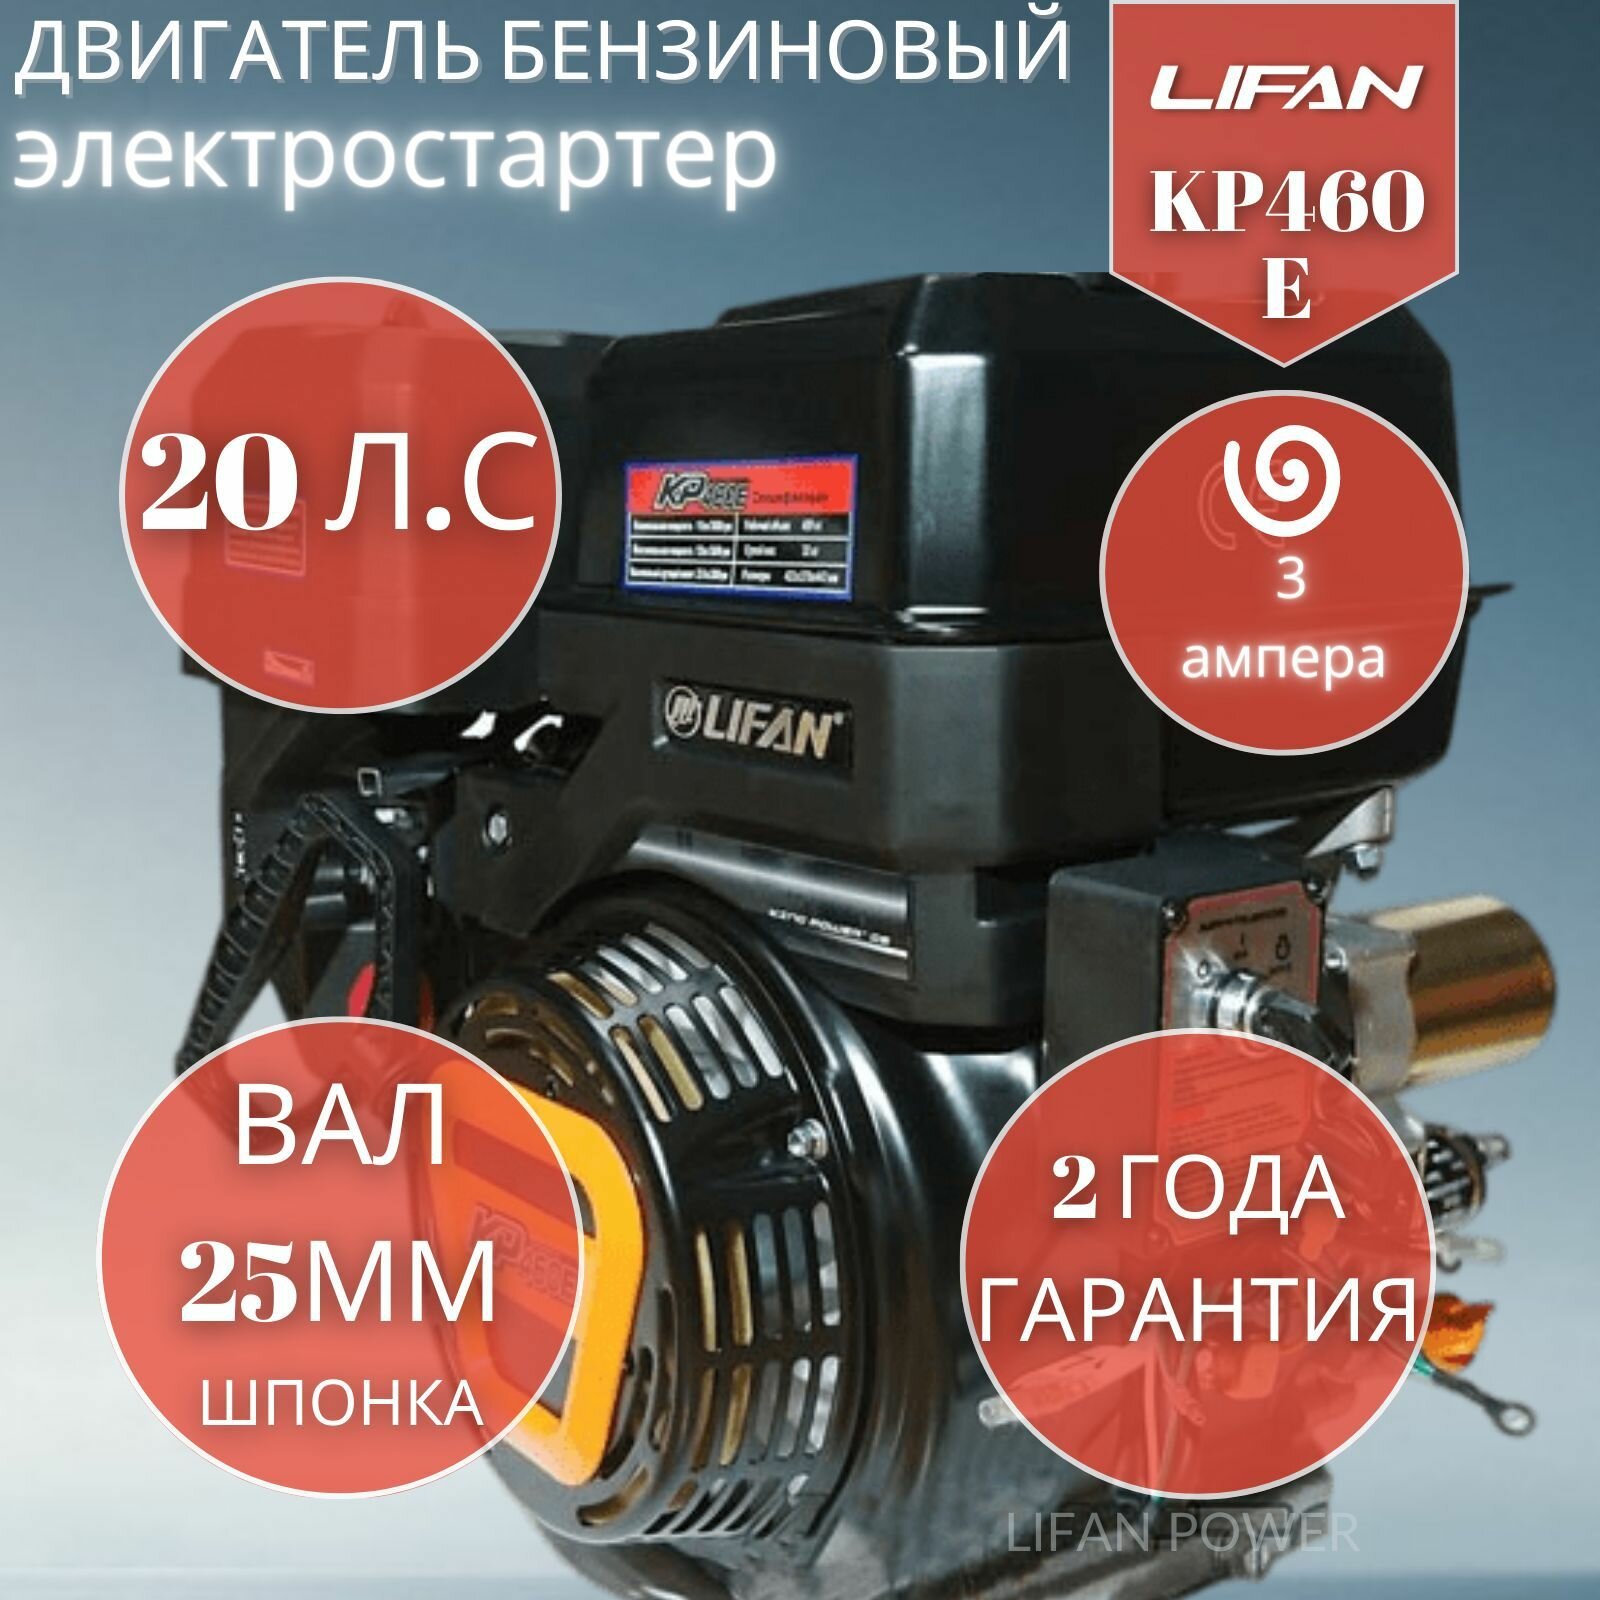 Двигатель бензиновый Lifan KP460E 3А (20 л. с. вал 25 мм электростартер катушка 3 А)